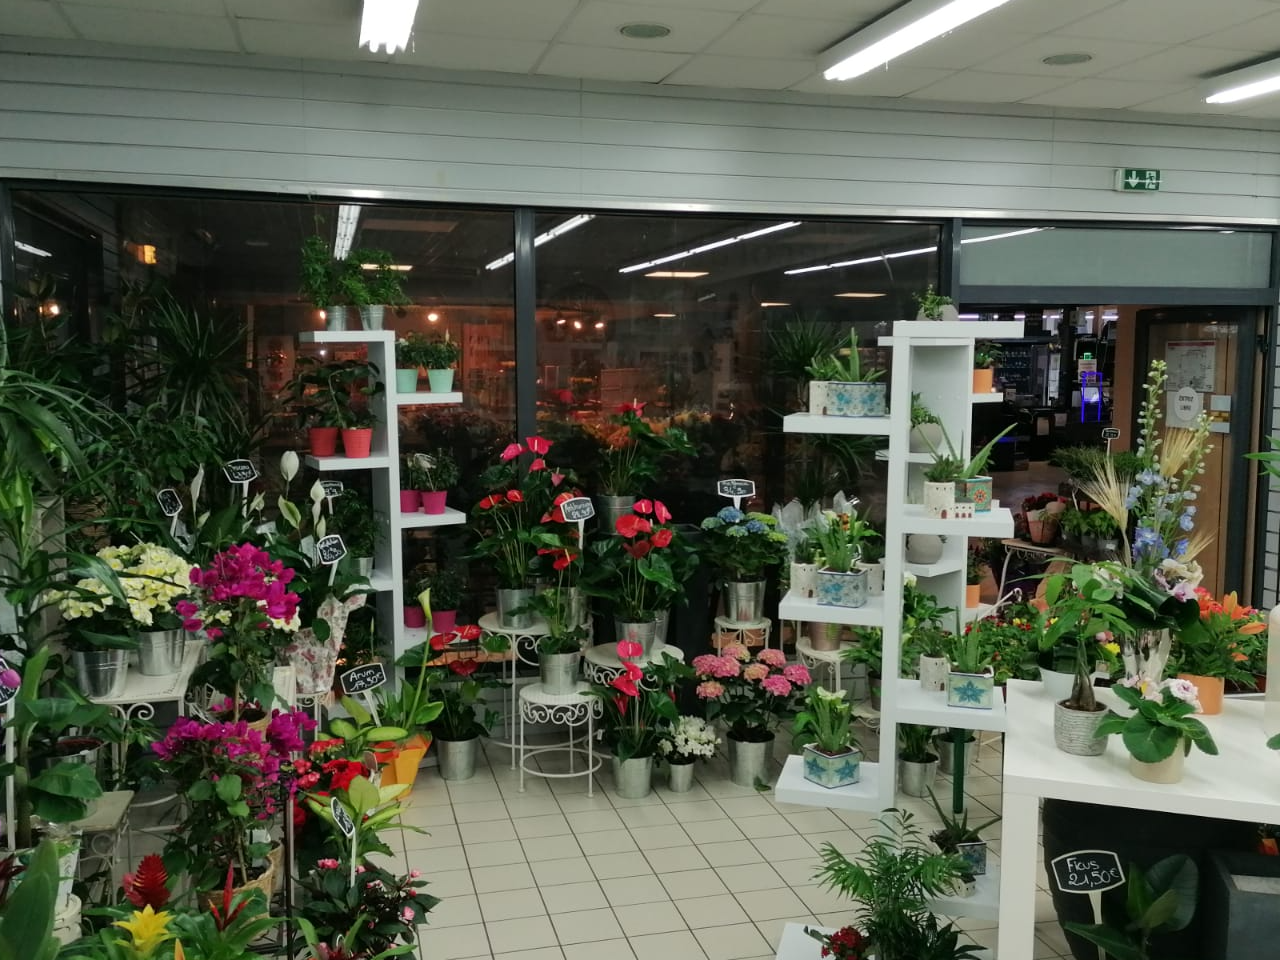 Vente fleuriste galerie marchande hyper sur Melun